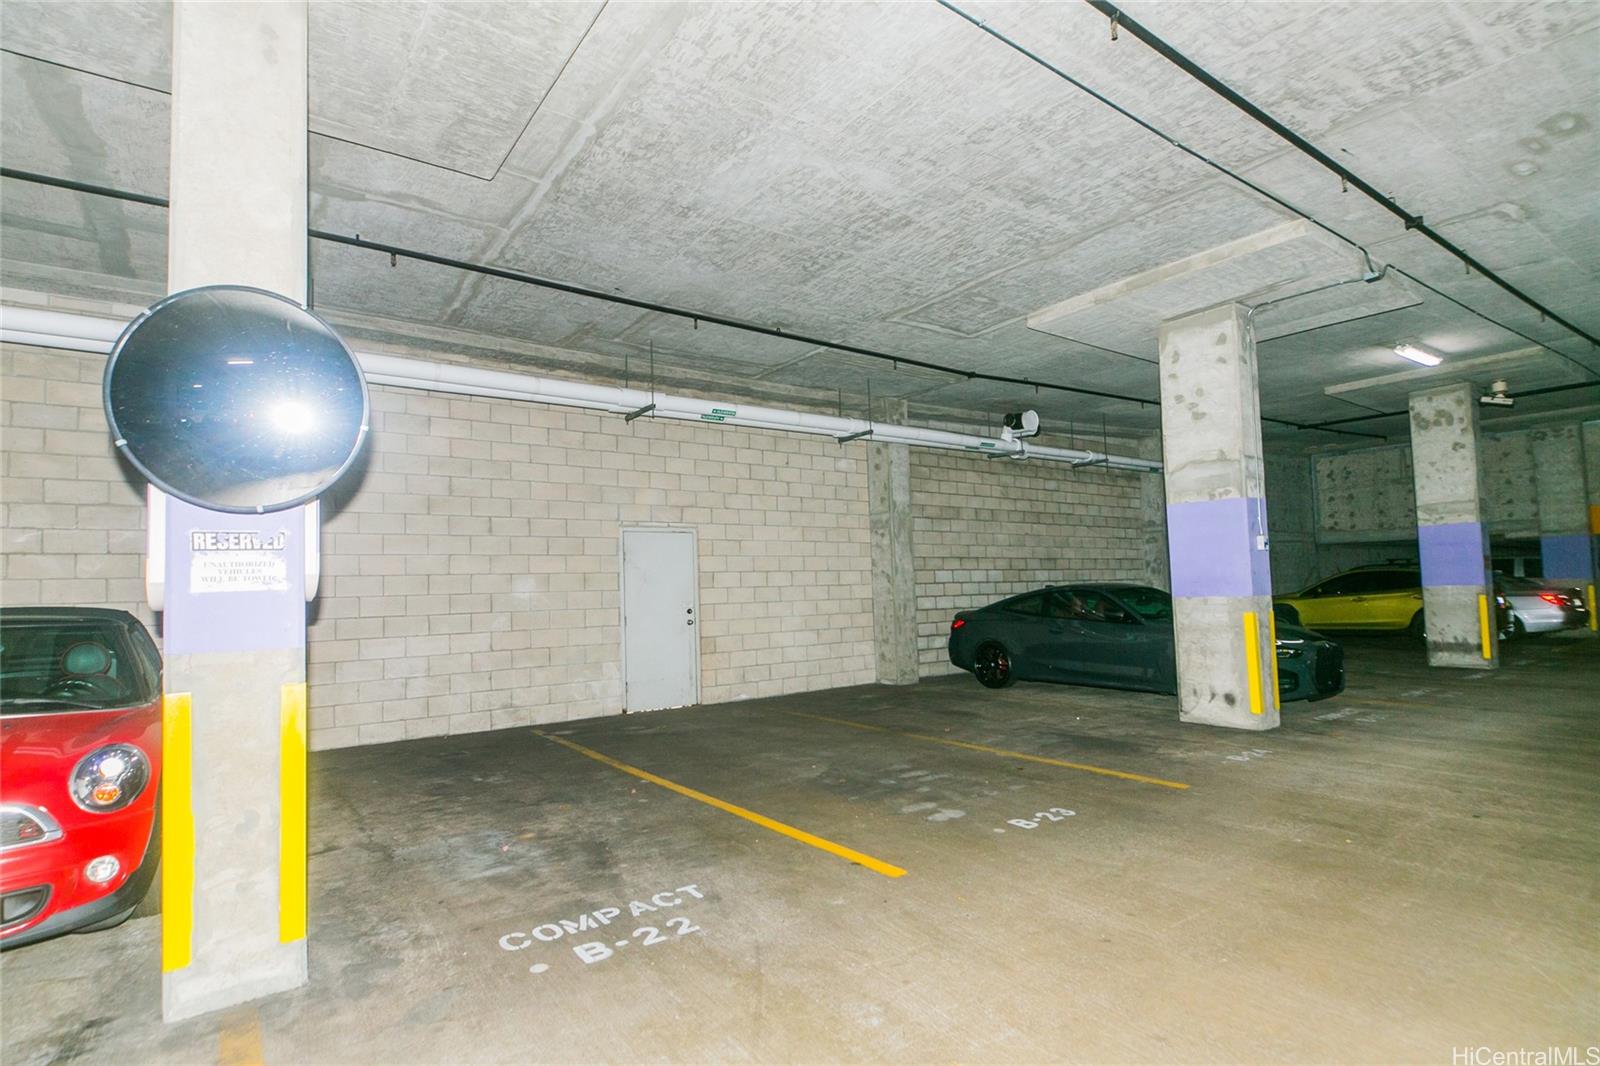 a view of a indoor garage